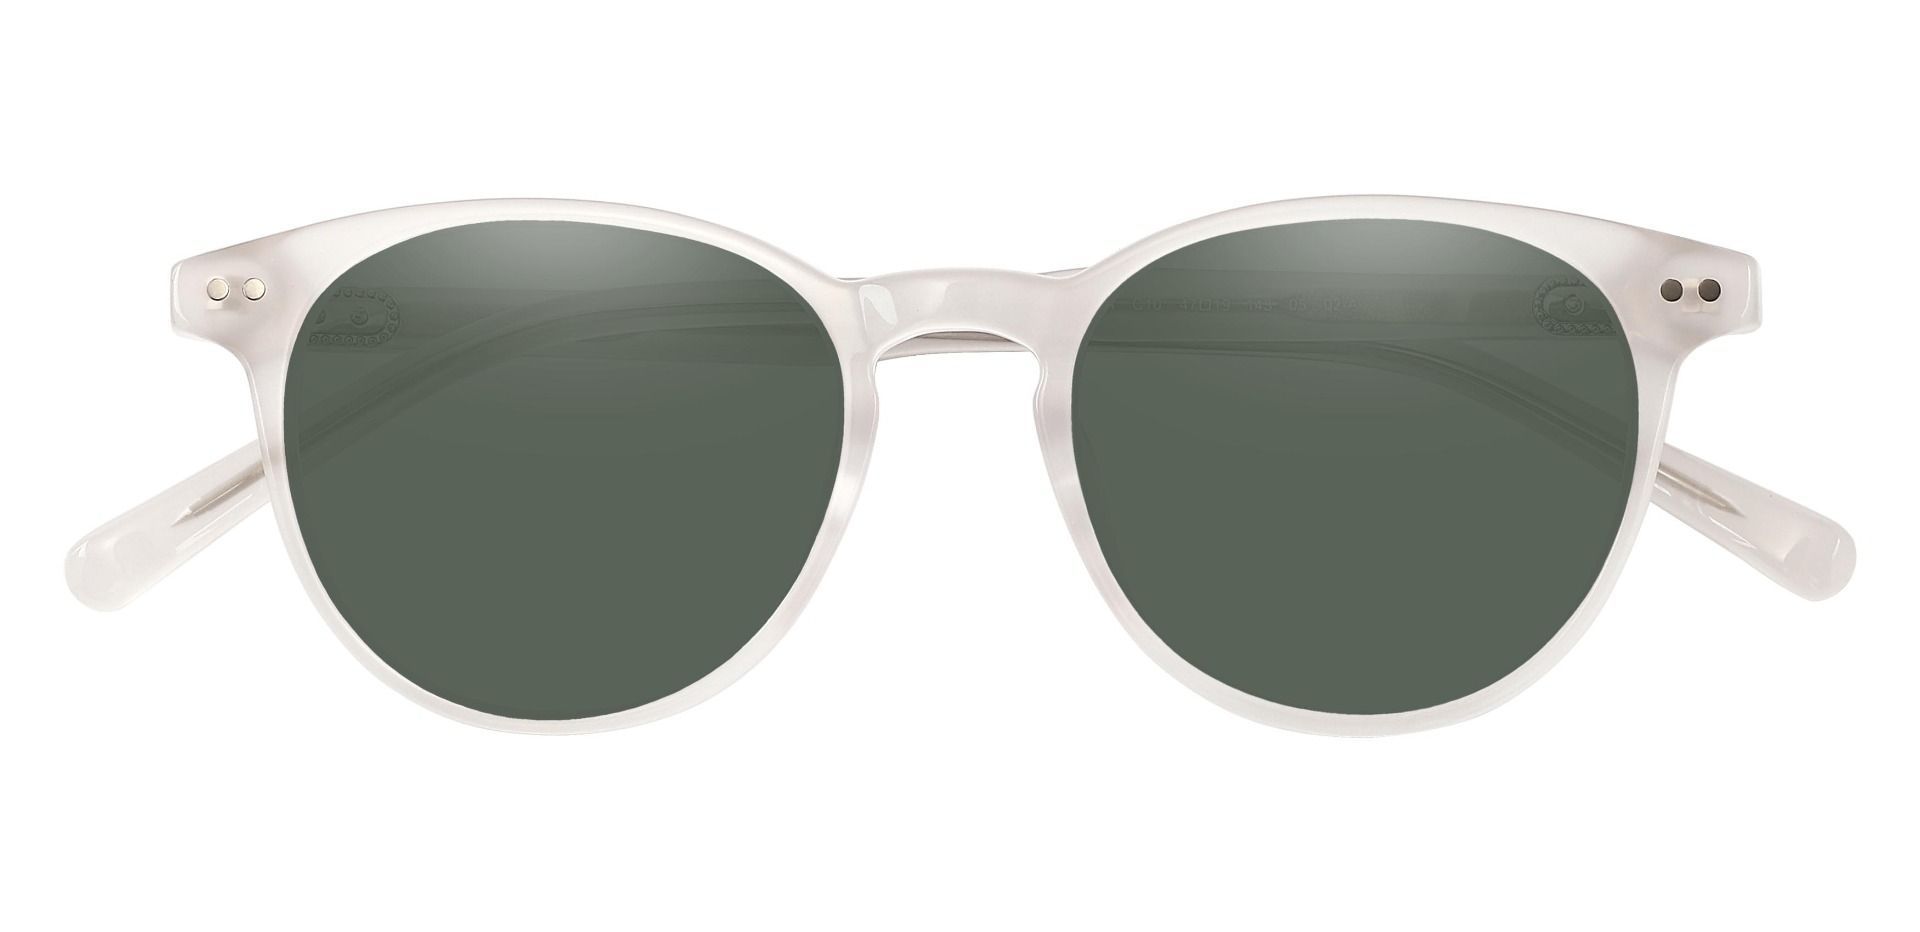 Marianna Oval Progressive Sunglasses - White Frame With Green Lenses